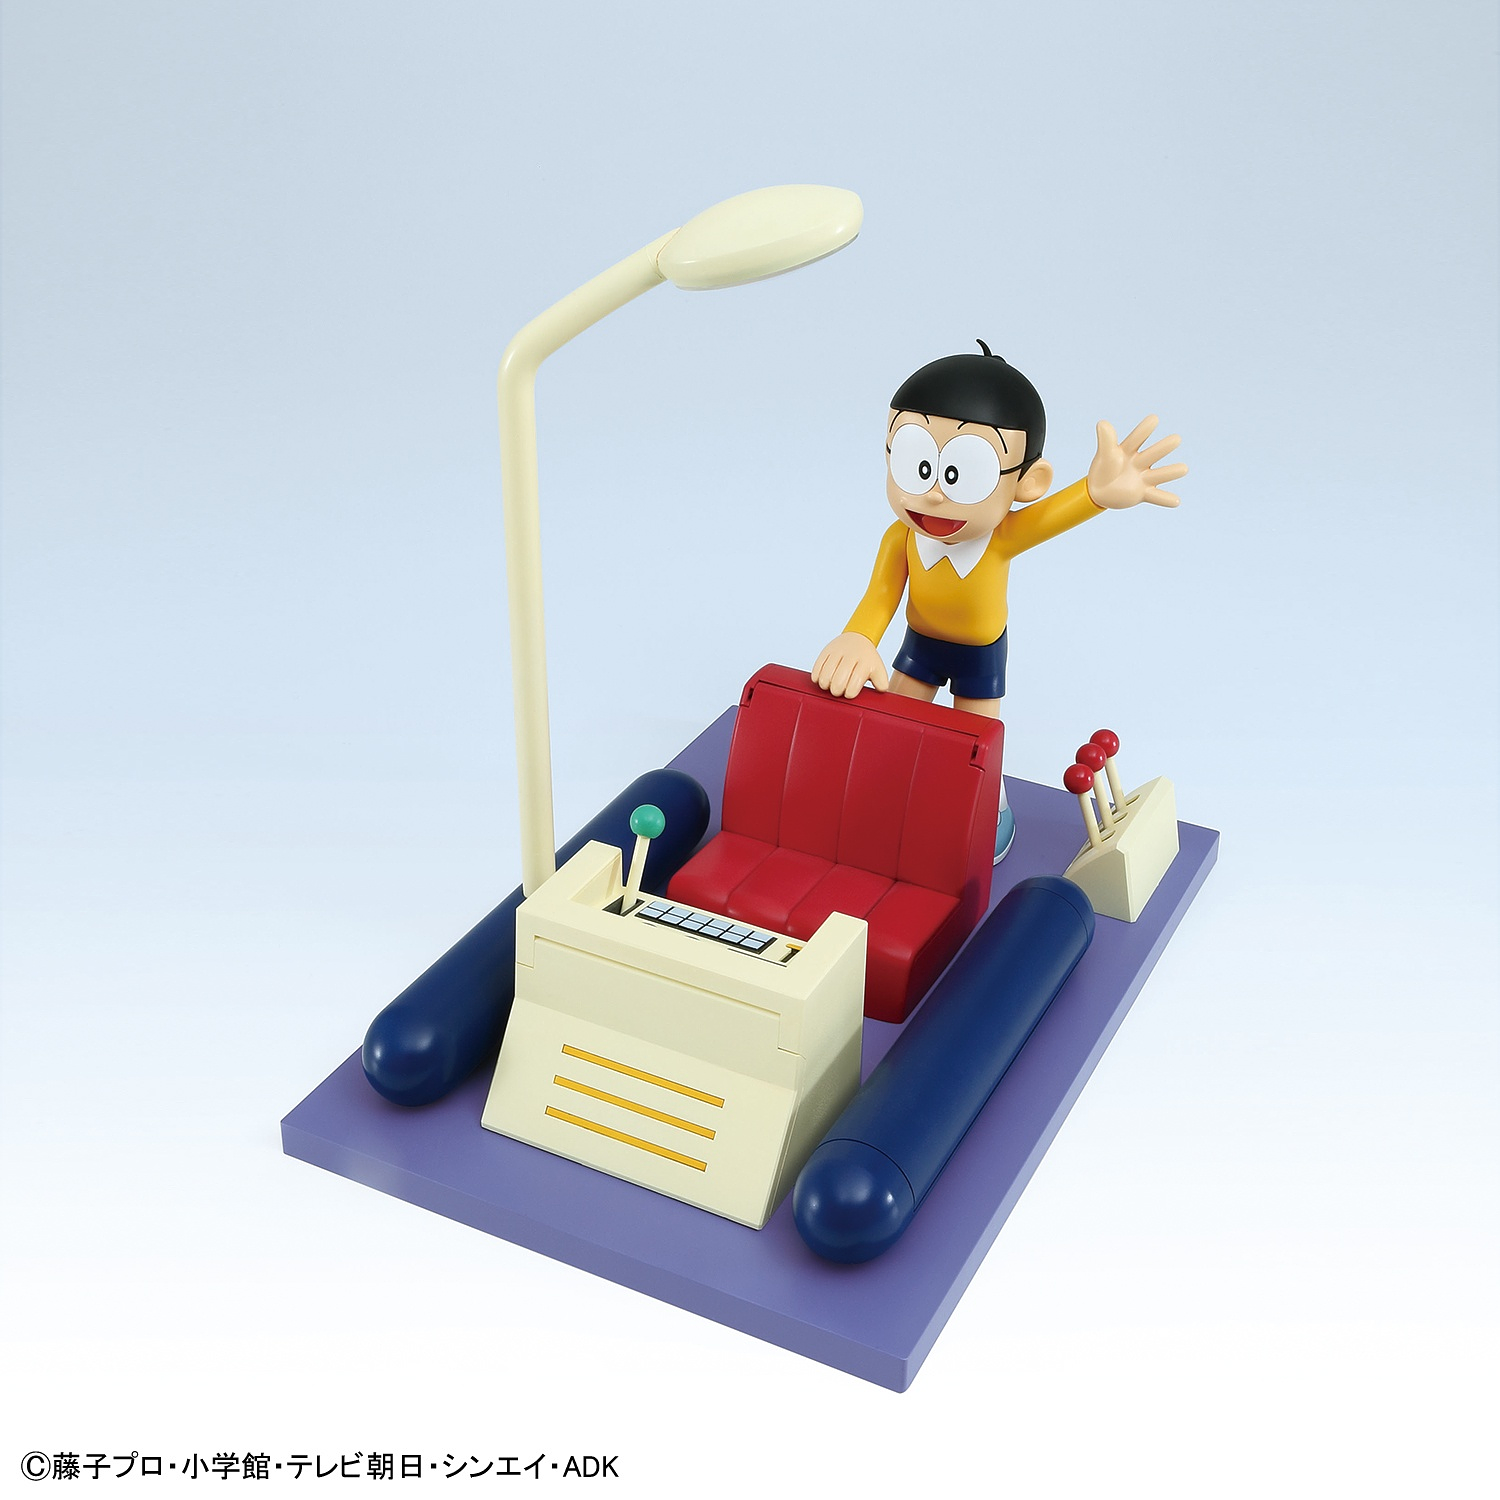 Figure-Rise Mechanics Time Machine Secret Gadget of Doraemon